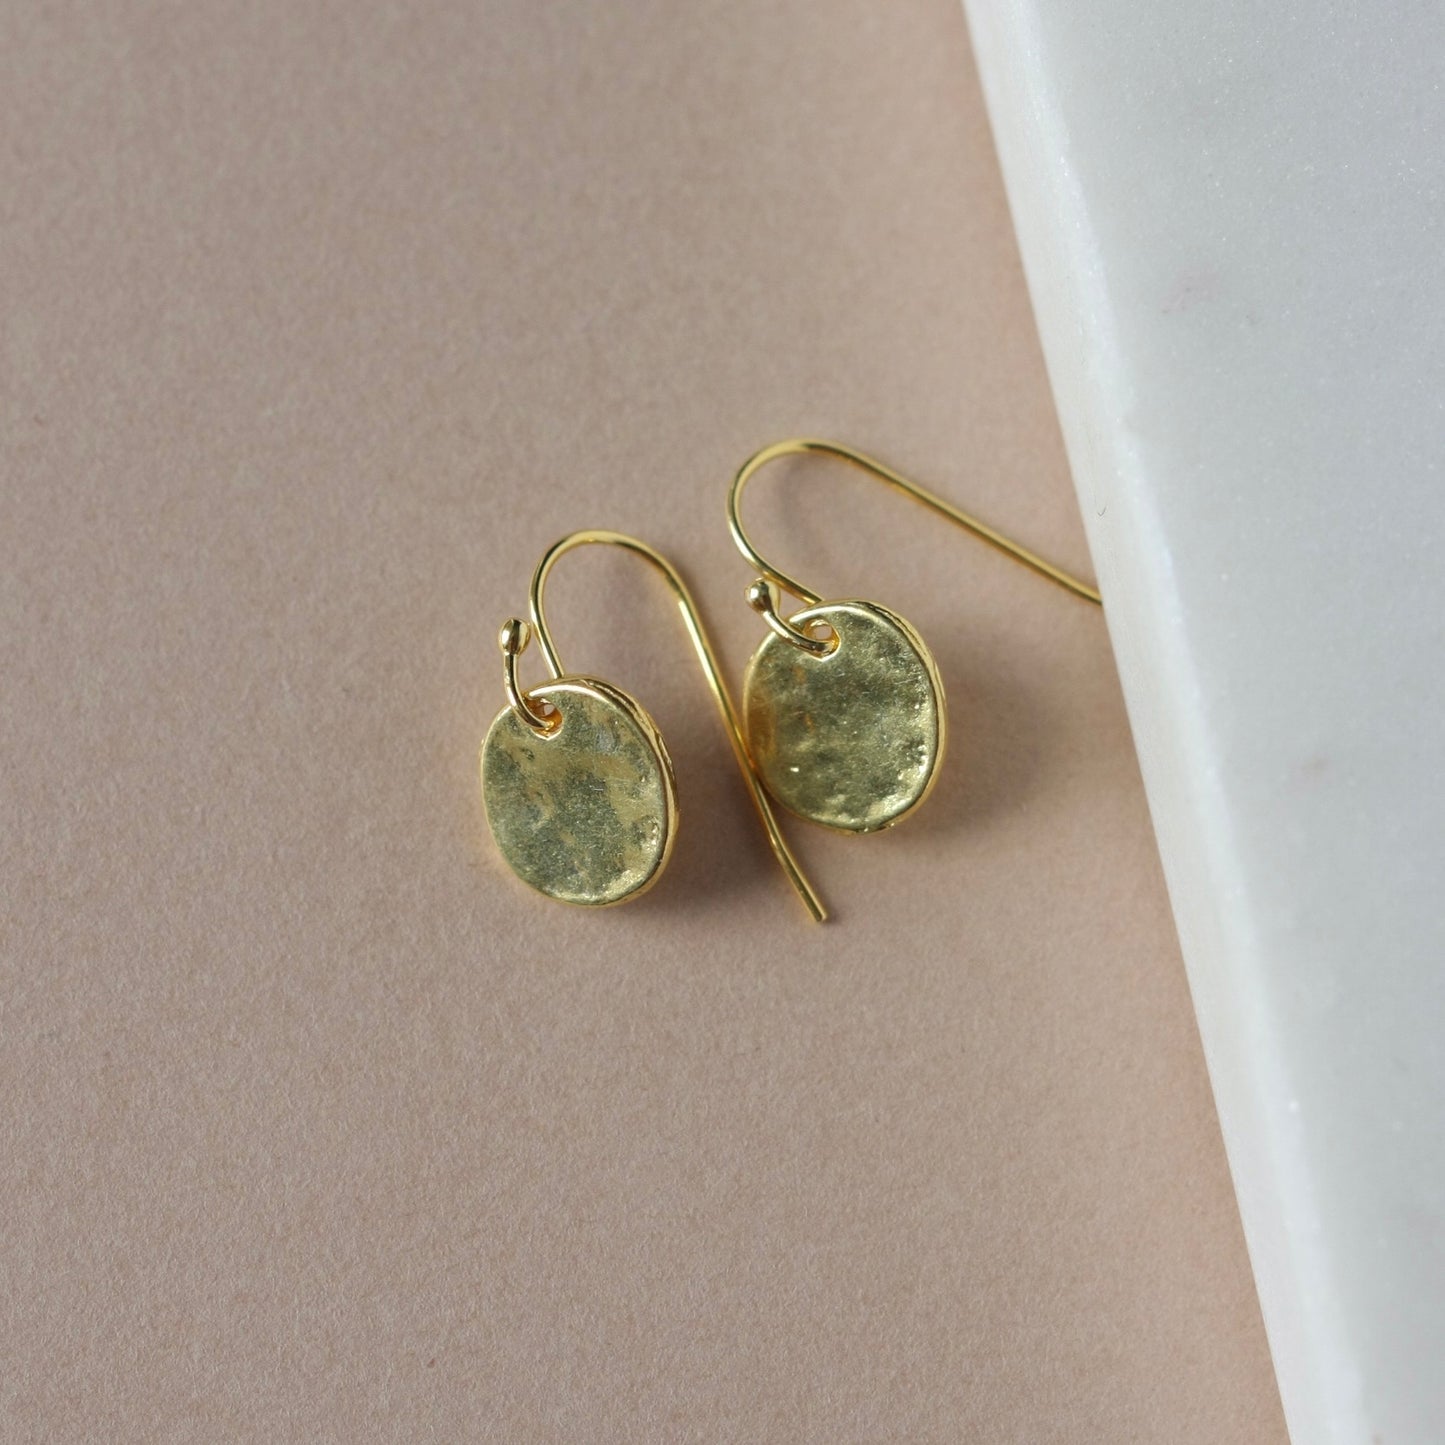 Minimalist Shiny Gold Disc Dangle Earrings